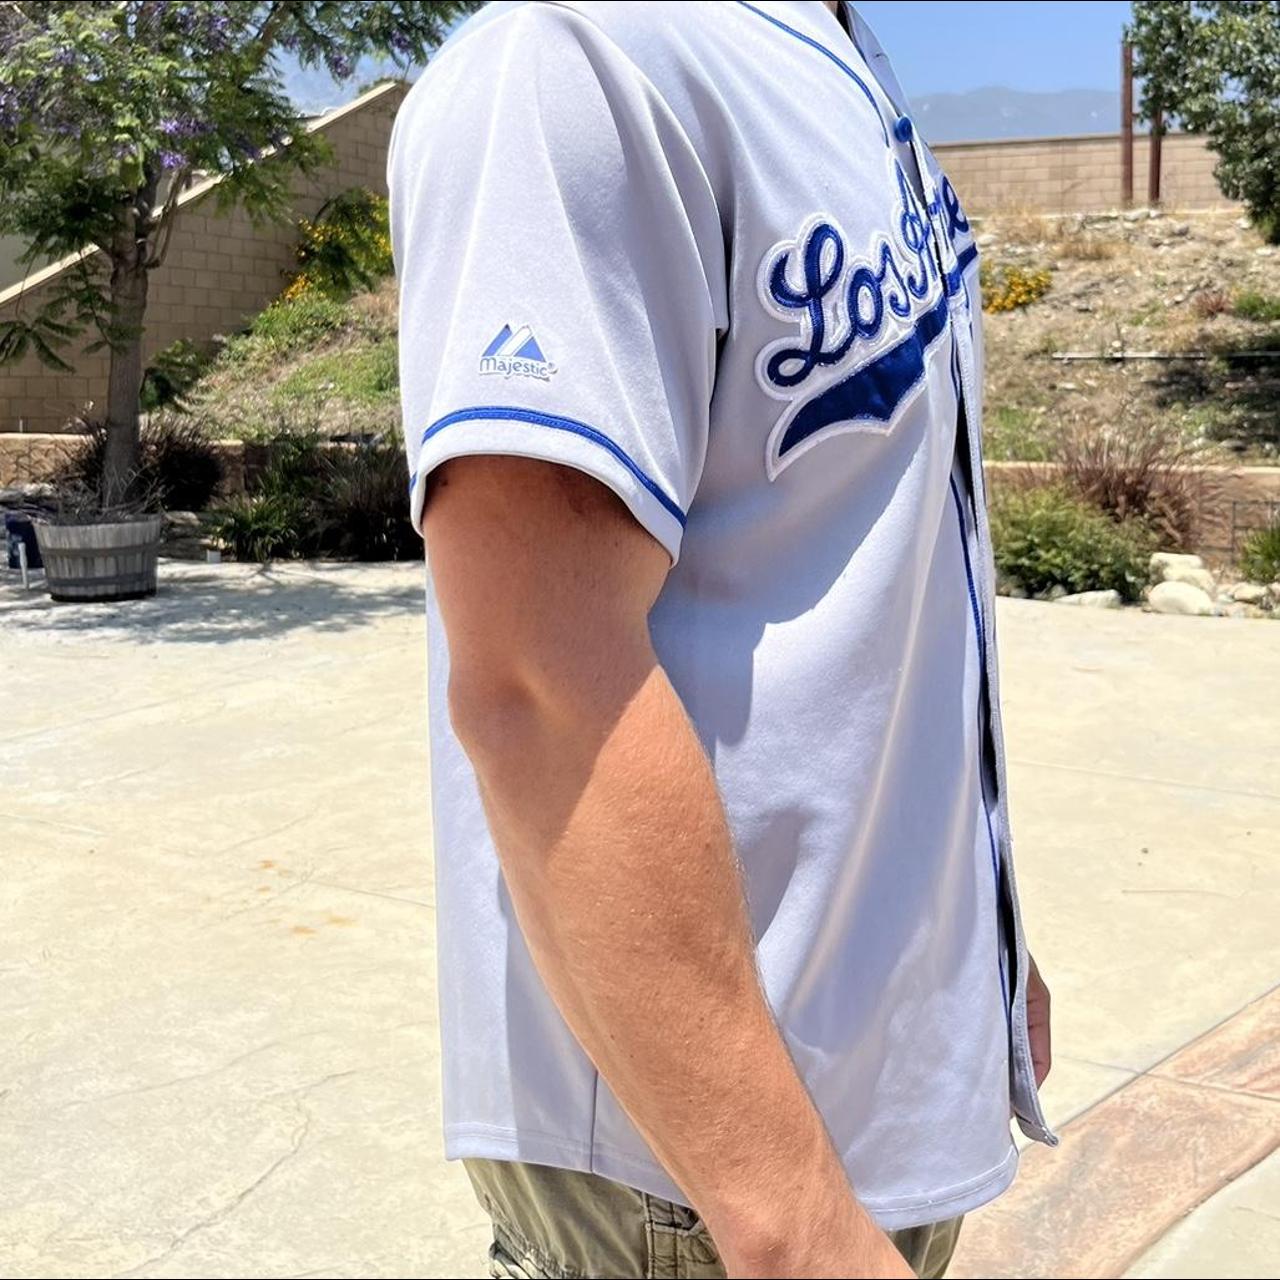 Dodgers Majestic jersey #Dodgers #baseball #blue #Mlb - Depop